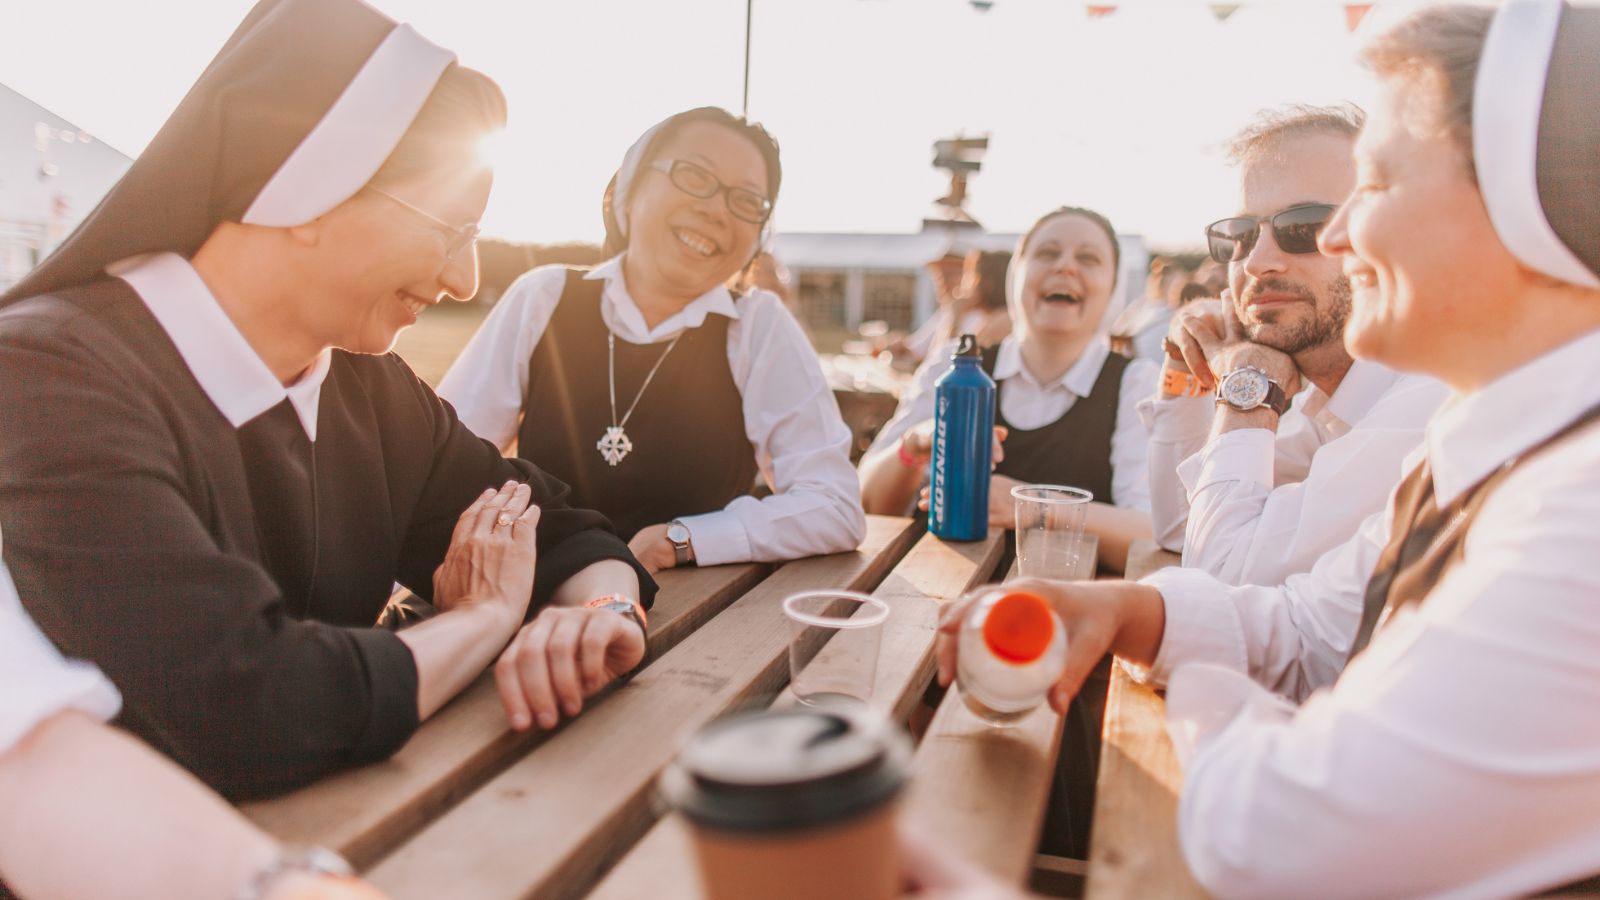 Catholic Nuns sitting around a table